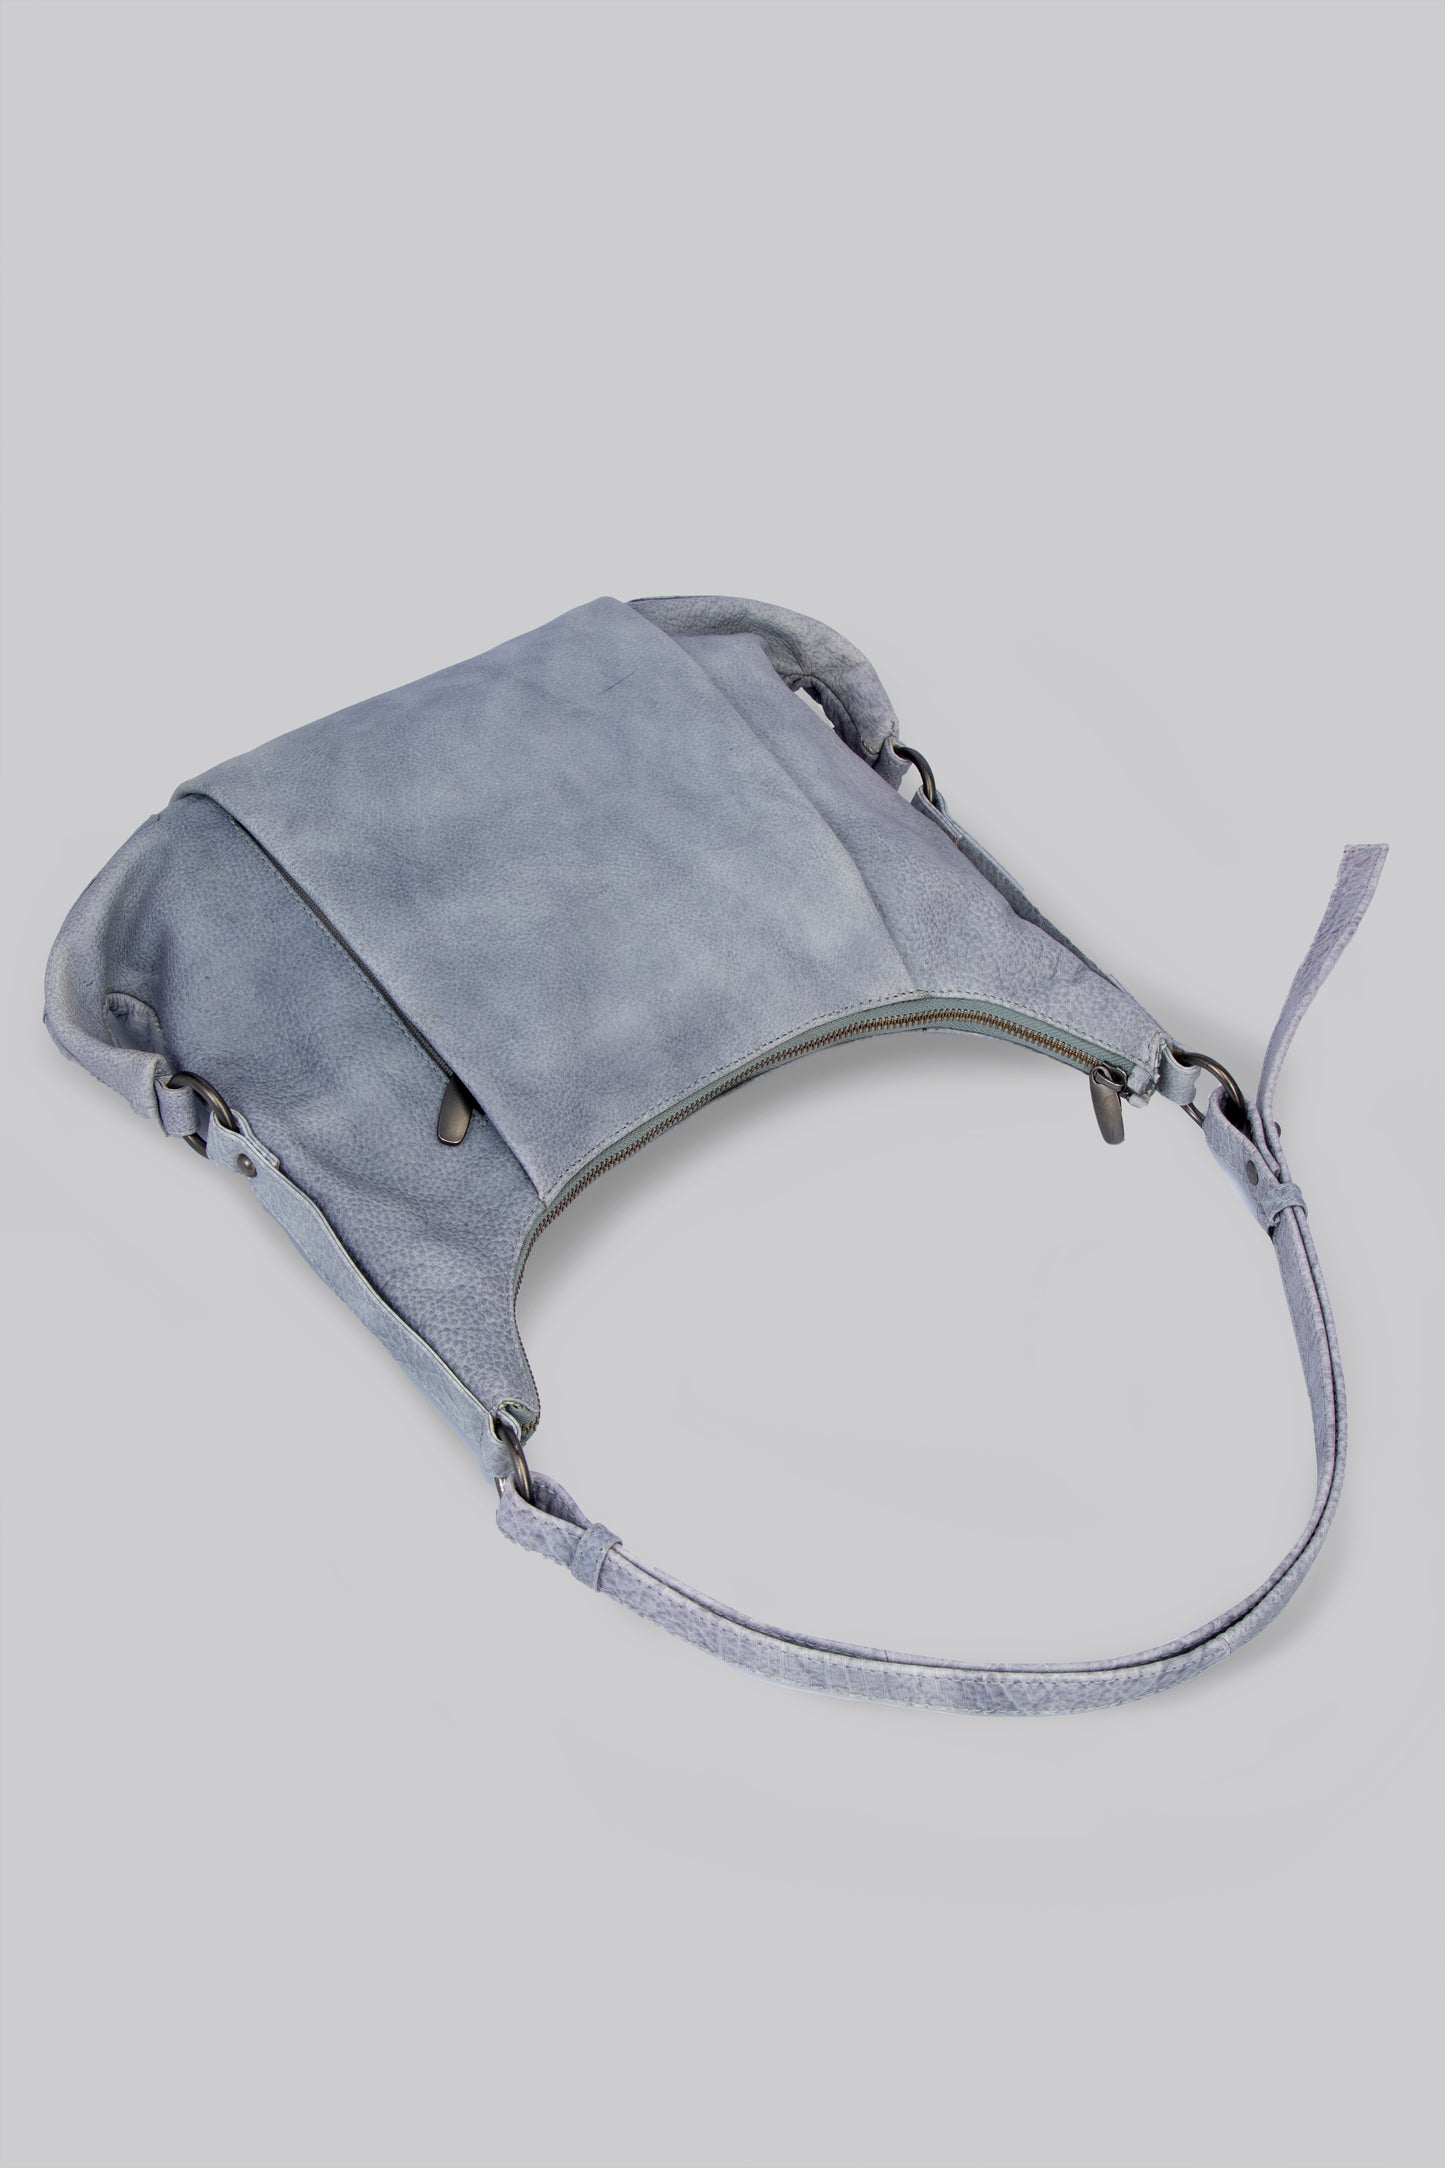 Sleek Hobo Bag in Stone Washed Sky Blue Leather